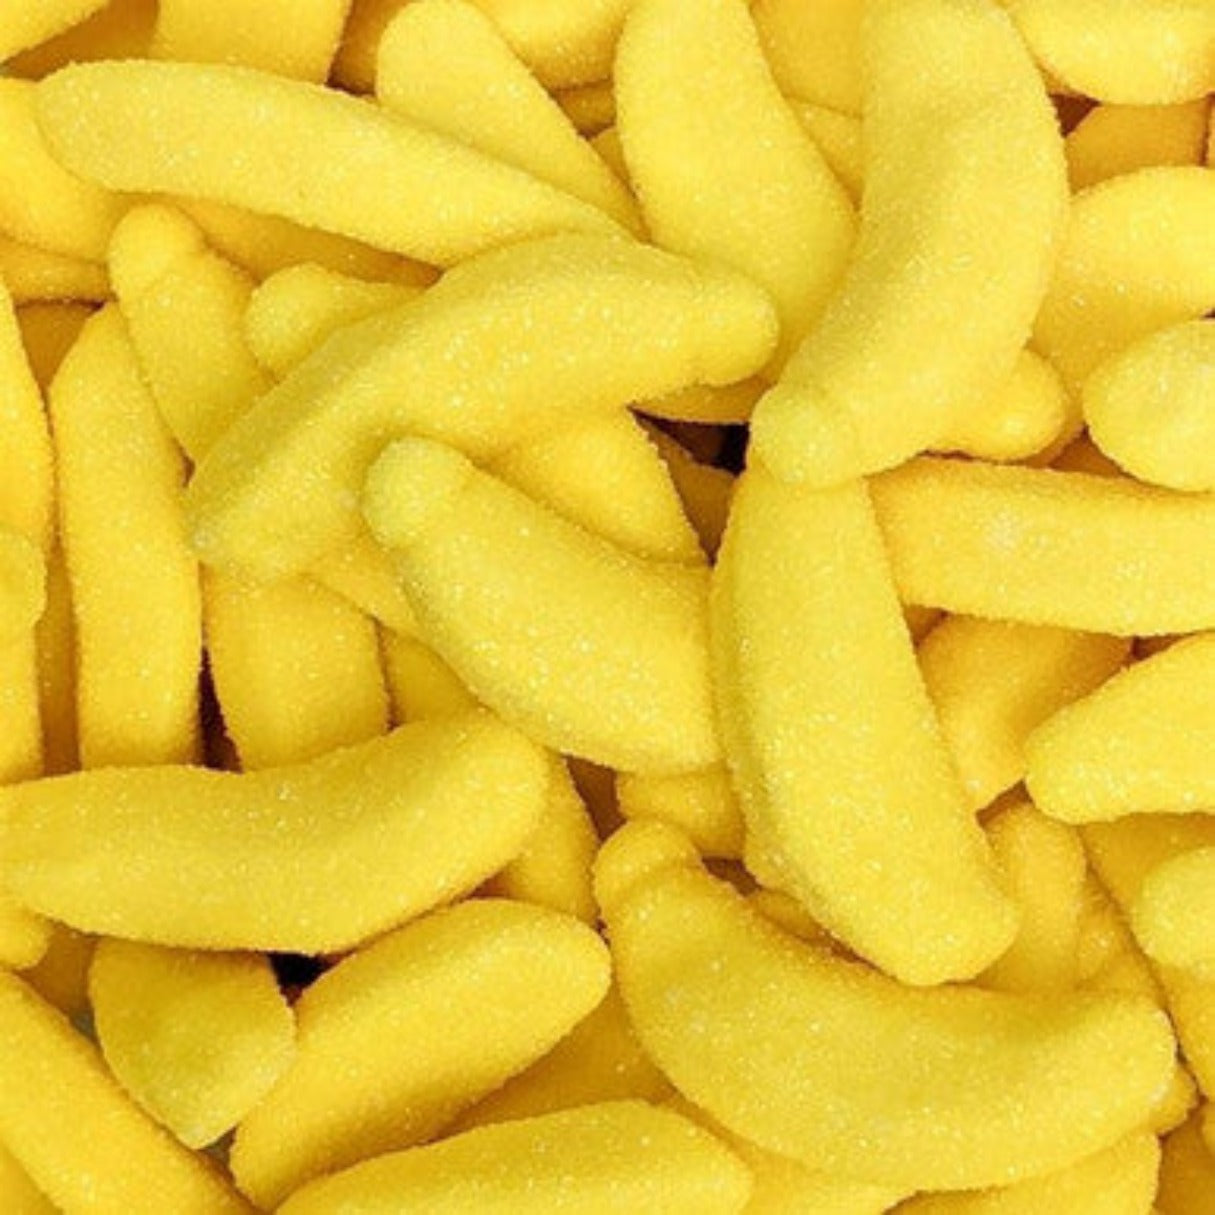 Vidal Gummi Bananas Bulk Bag 4.4lbs - 1ct